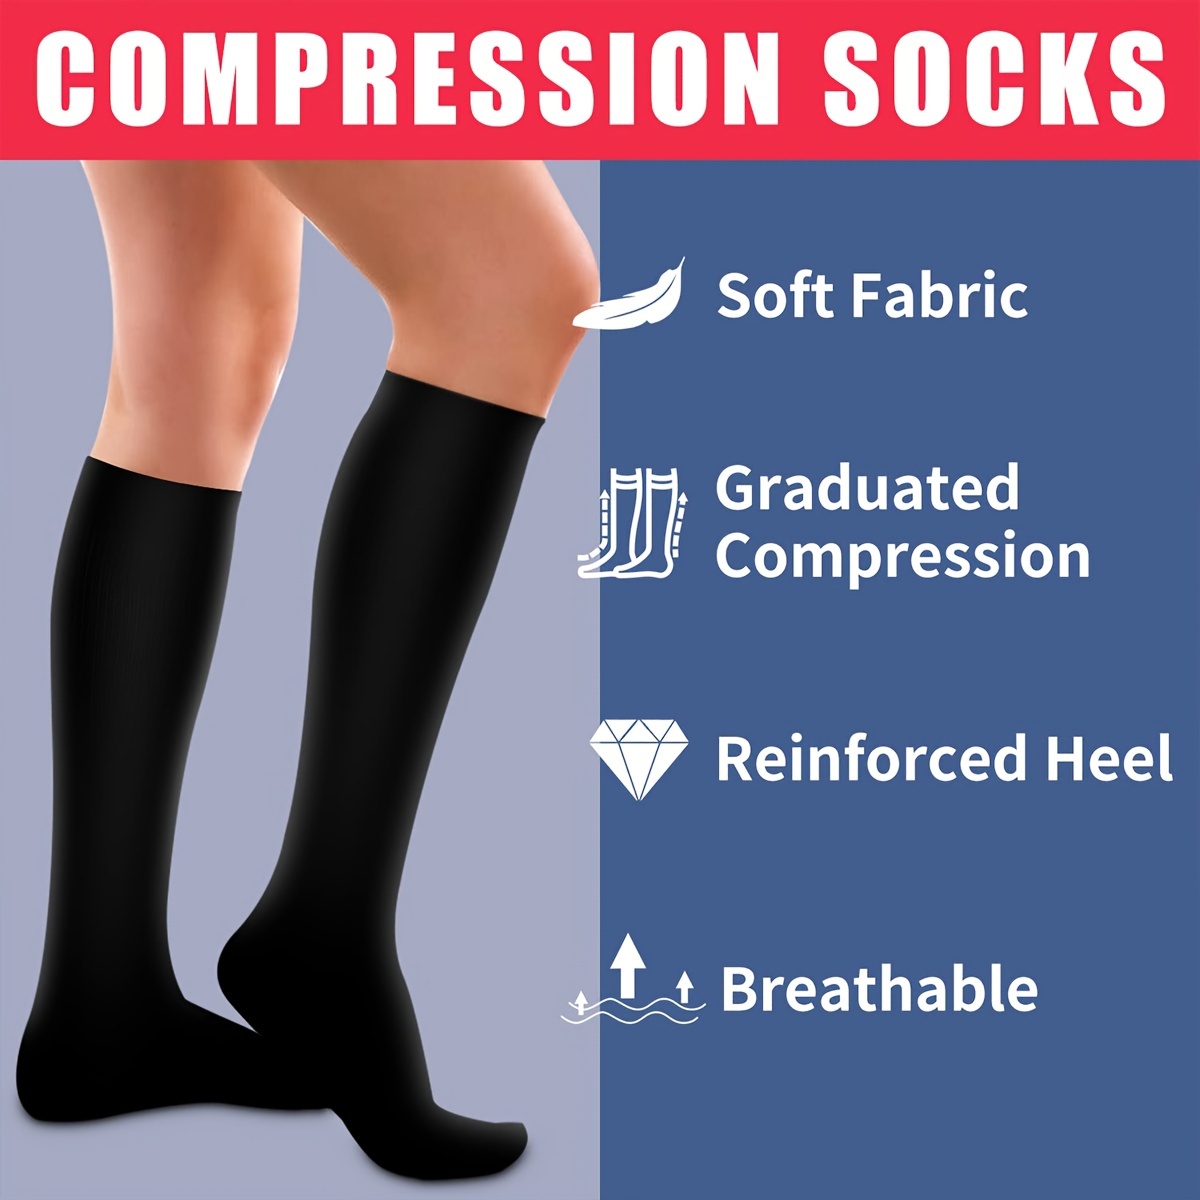 5 Pairs Knee High Graduated Compression Socks For Women and Men - Best  Medical, Nursing, Travel & Flight Socks - Running & Fitness - 15-20mmHg  (L/XL